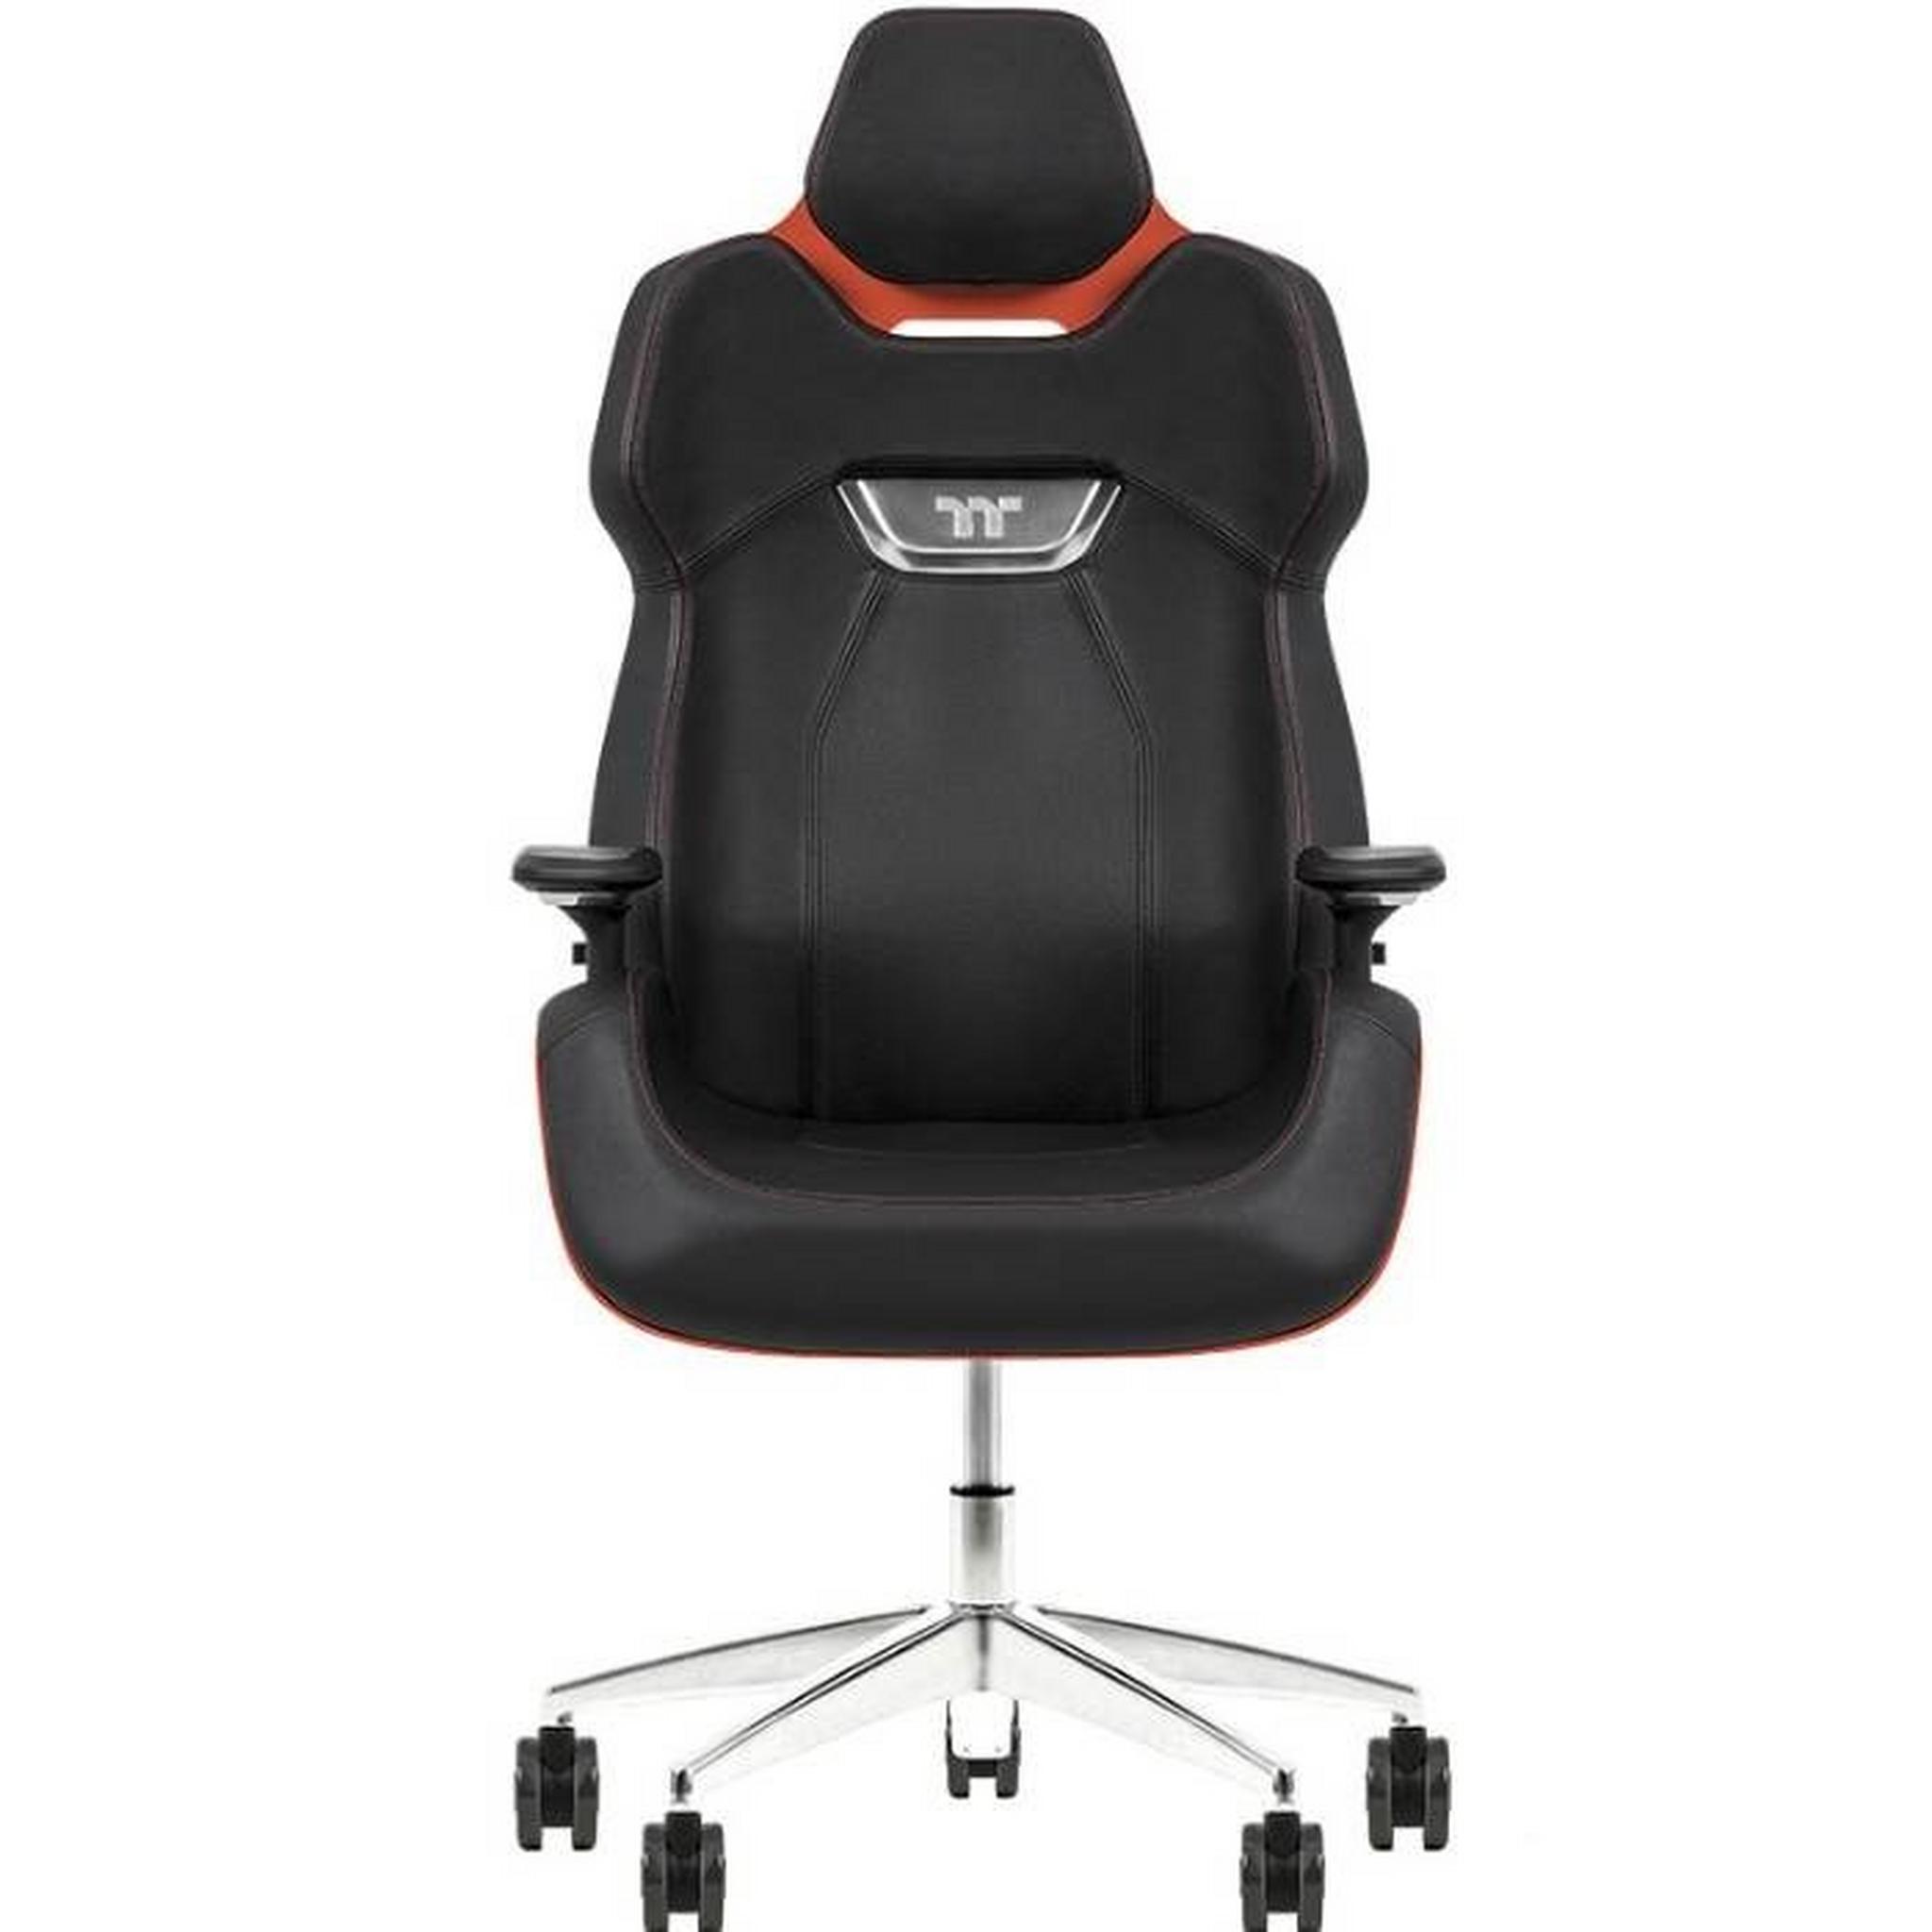 Thermaltake Argent E700 Real Leather Gaming Chair, Design by Studio F. A. Porsche, GGC-ARG-BRLFDL-01– Orange